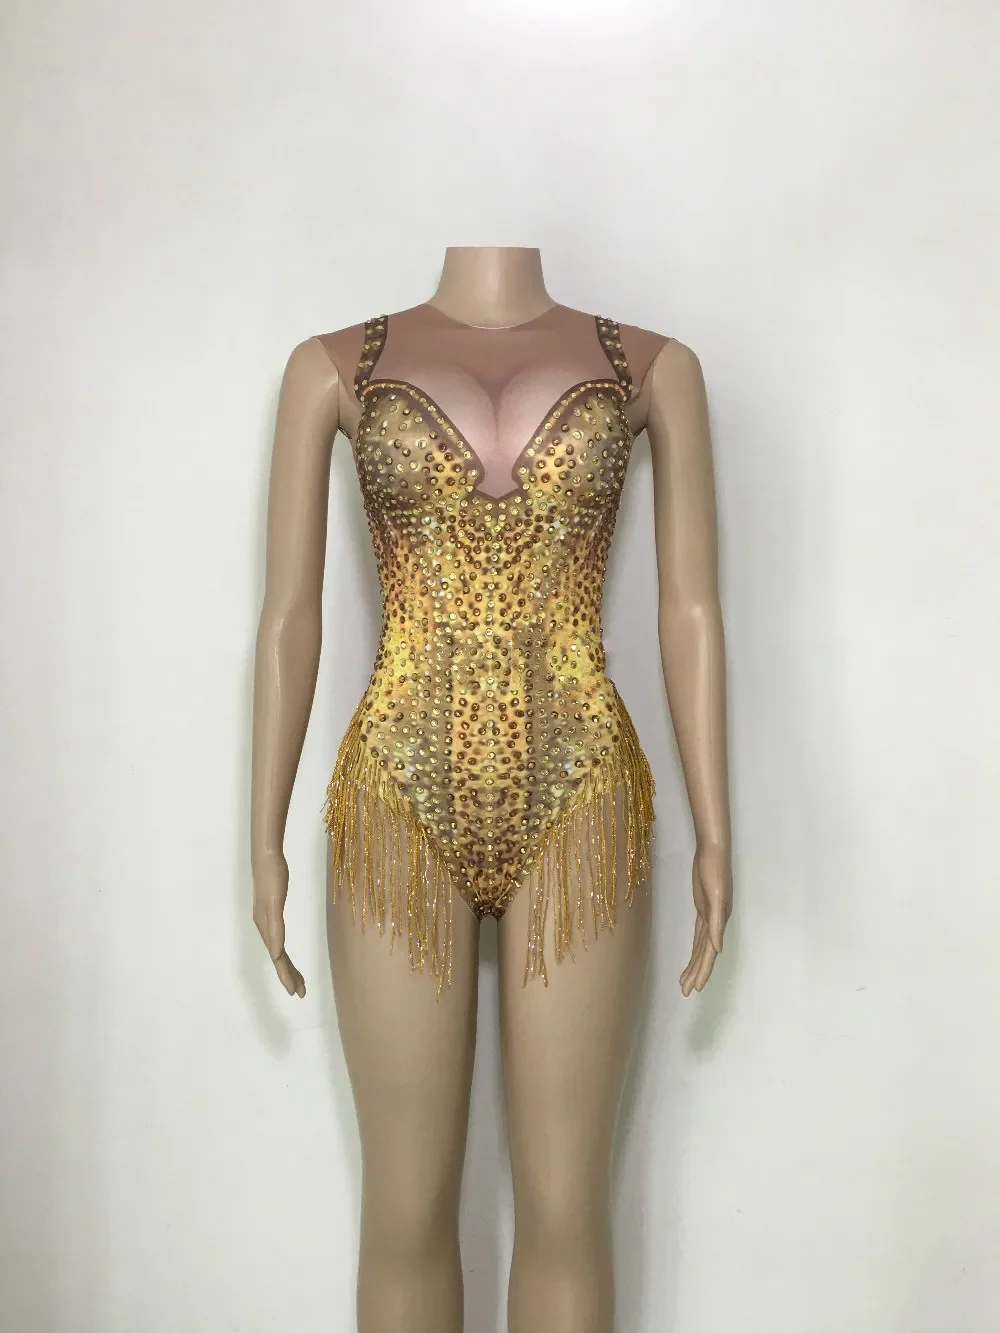 sparkly-gold-tassel-leotard-rhinestones-bodysuit-for-women-stage-dance-performance-wear-sexy-nightclub-prom-dancing-costumes